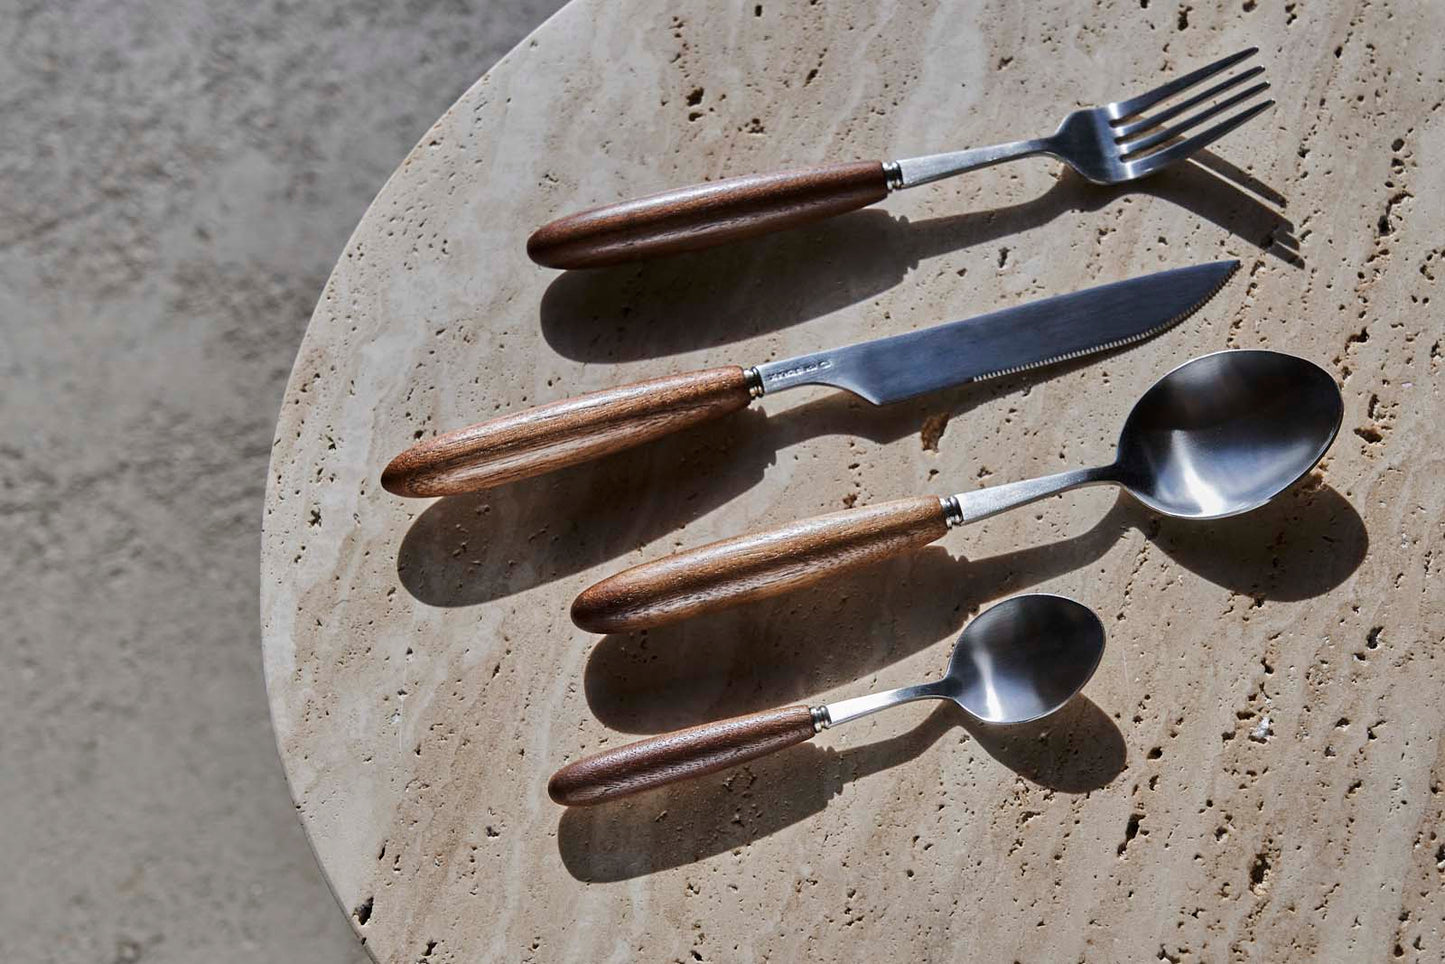 Feast Table Spoons (6 pk)